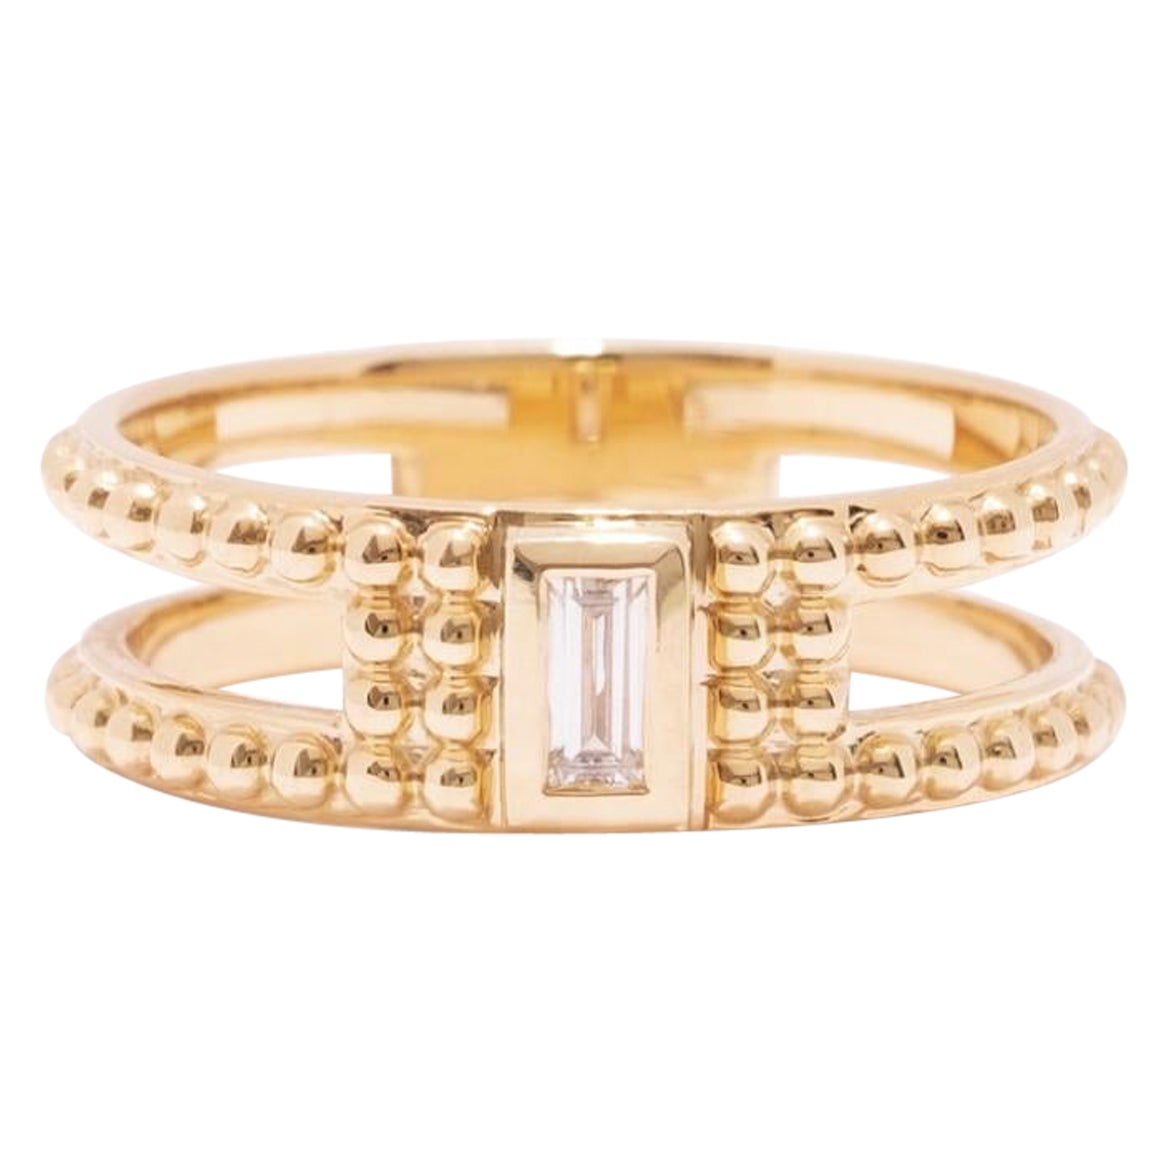 0.11 Carat Baguette Diamond 14K Yellow Gold Ring, Size 7 US